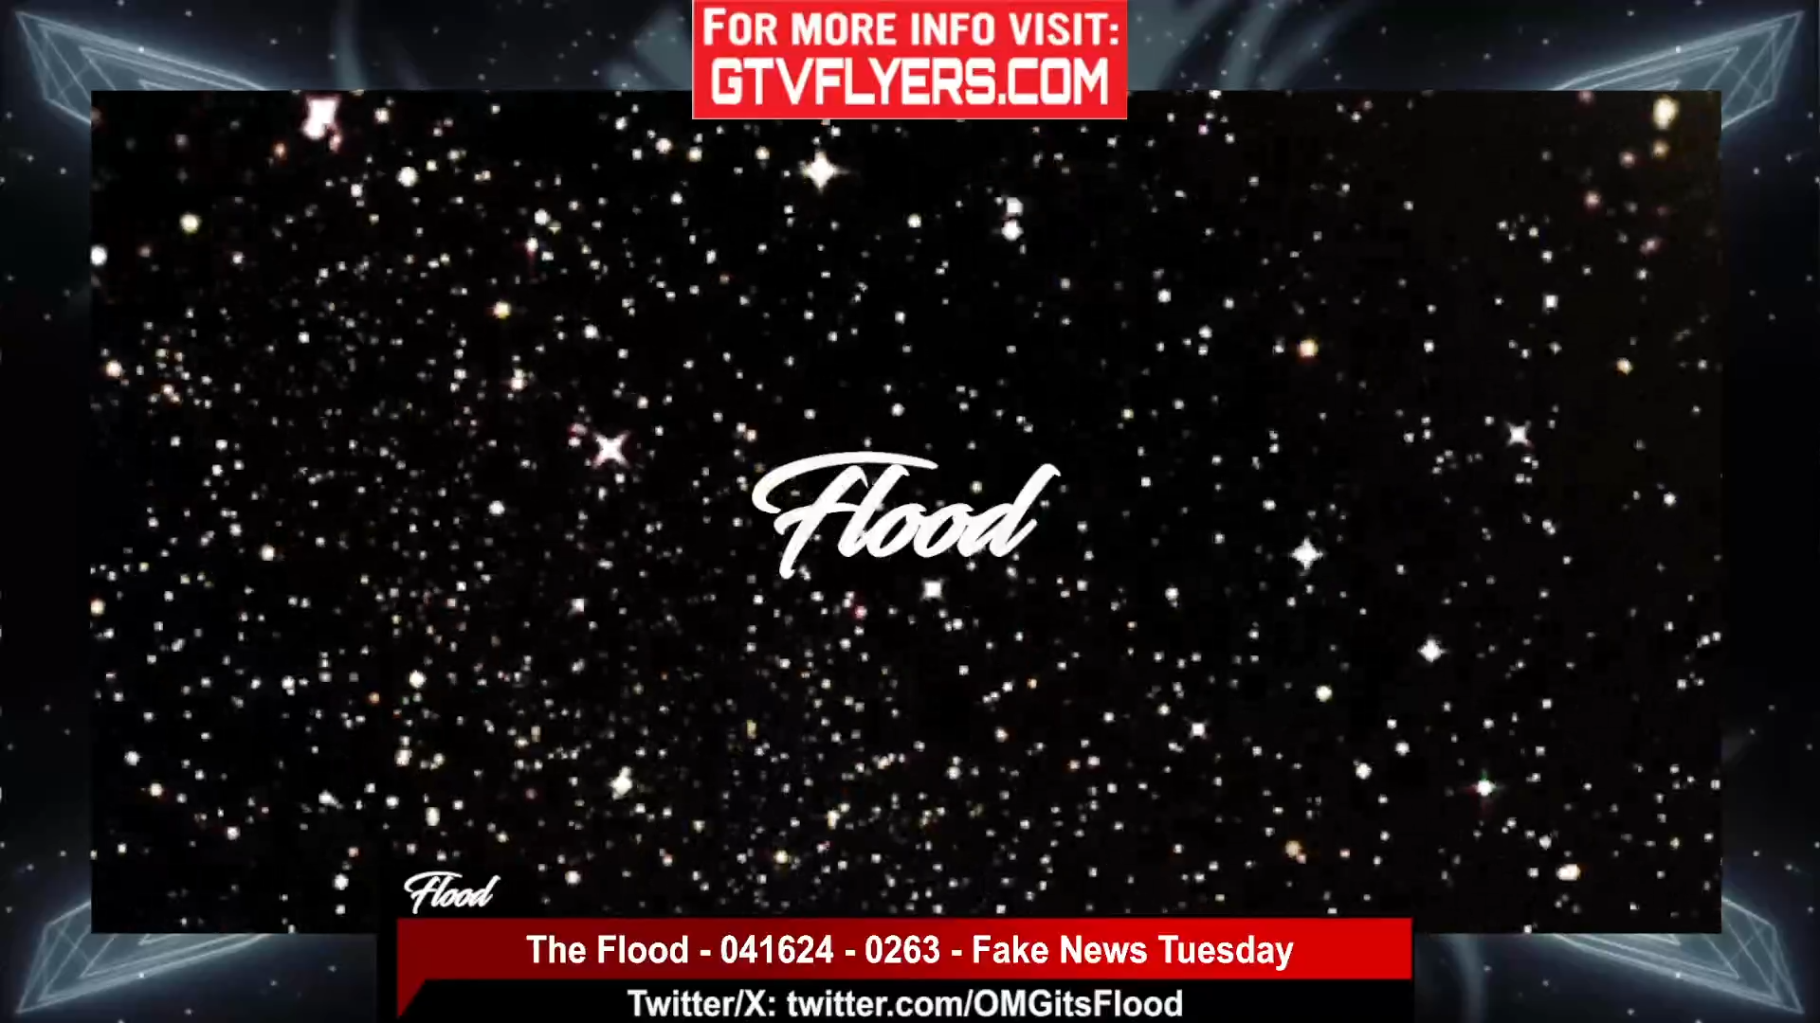 The Flood - 041624 - 0263 - Fake News Tuesday